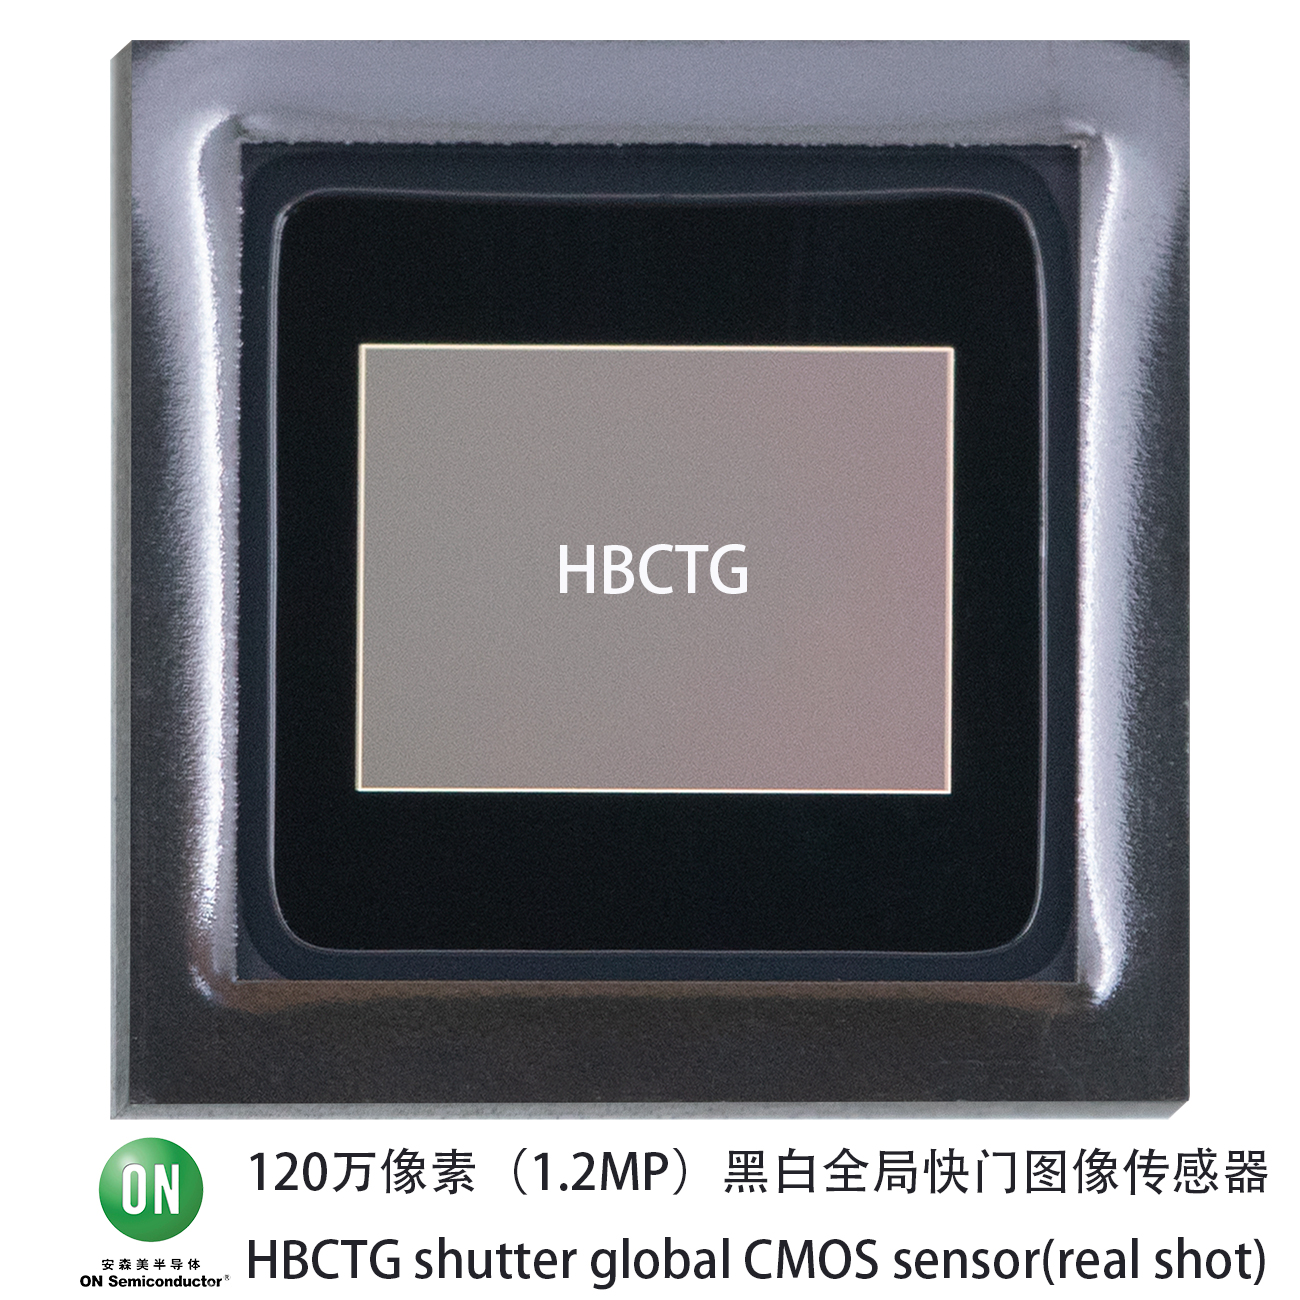 HBCTG(mono)，HBCTJ(color)，ONSEMI Aptina 安森美工业相机图像传感器， 1/3-inch 1.2MP image sensor，全局快门工业相机黑白（单色）彩色图像传感器，color or monochrome glonal shutter cmos sensor，cmos sensor  for industrial camera